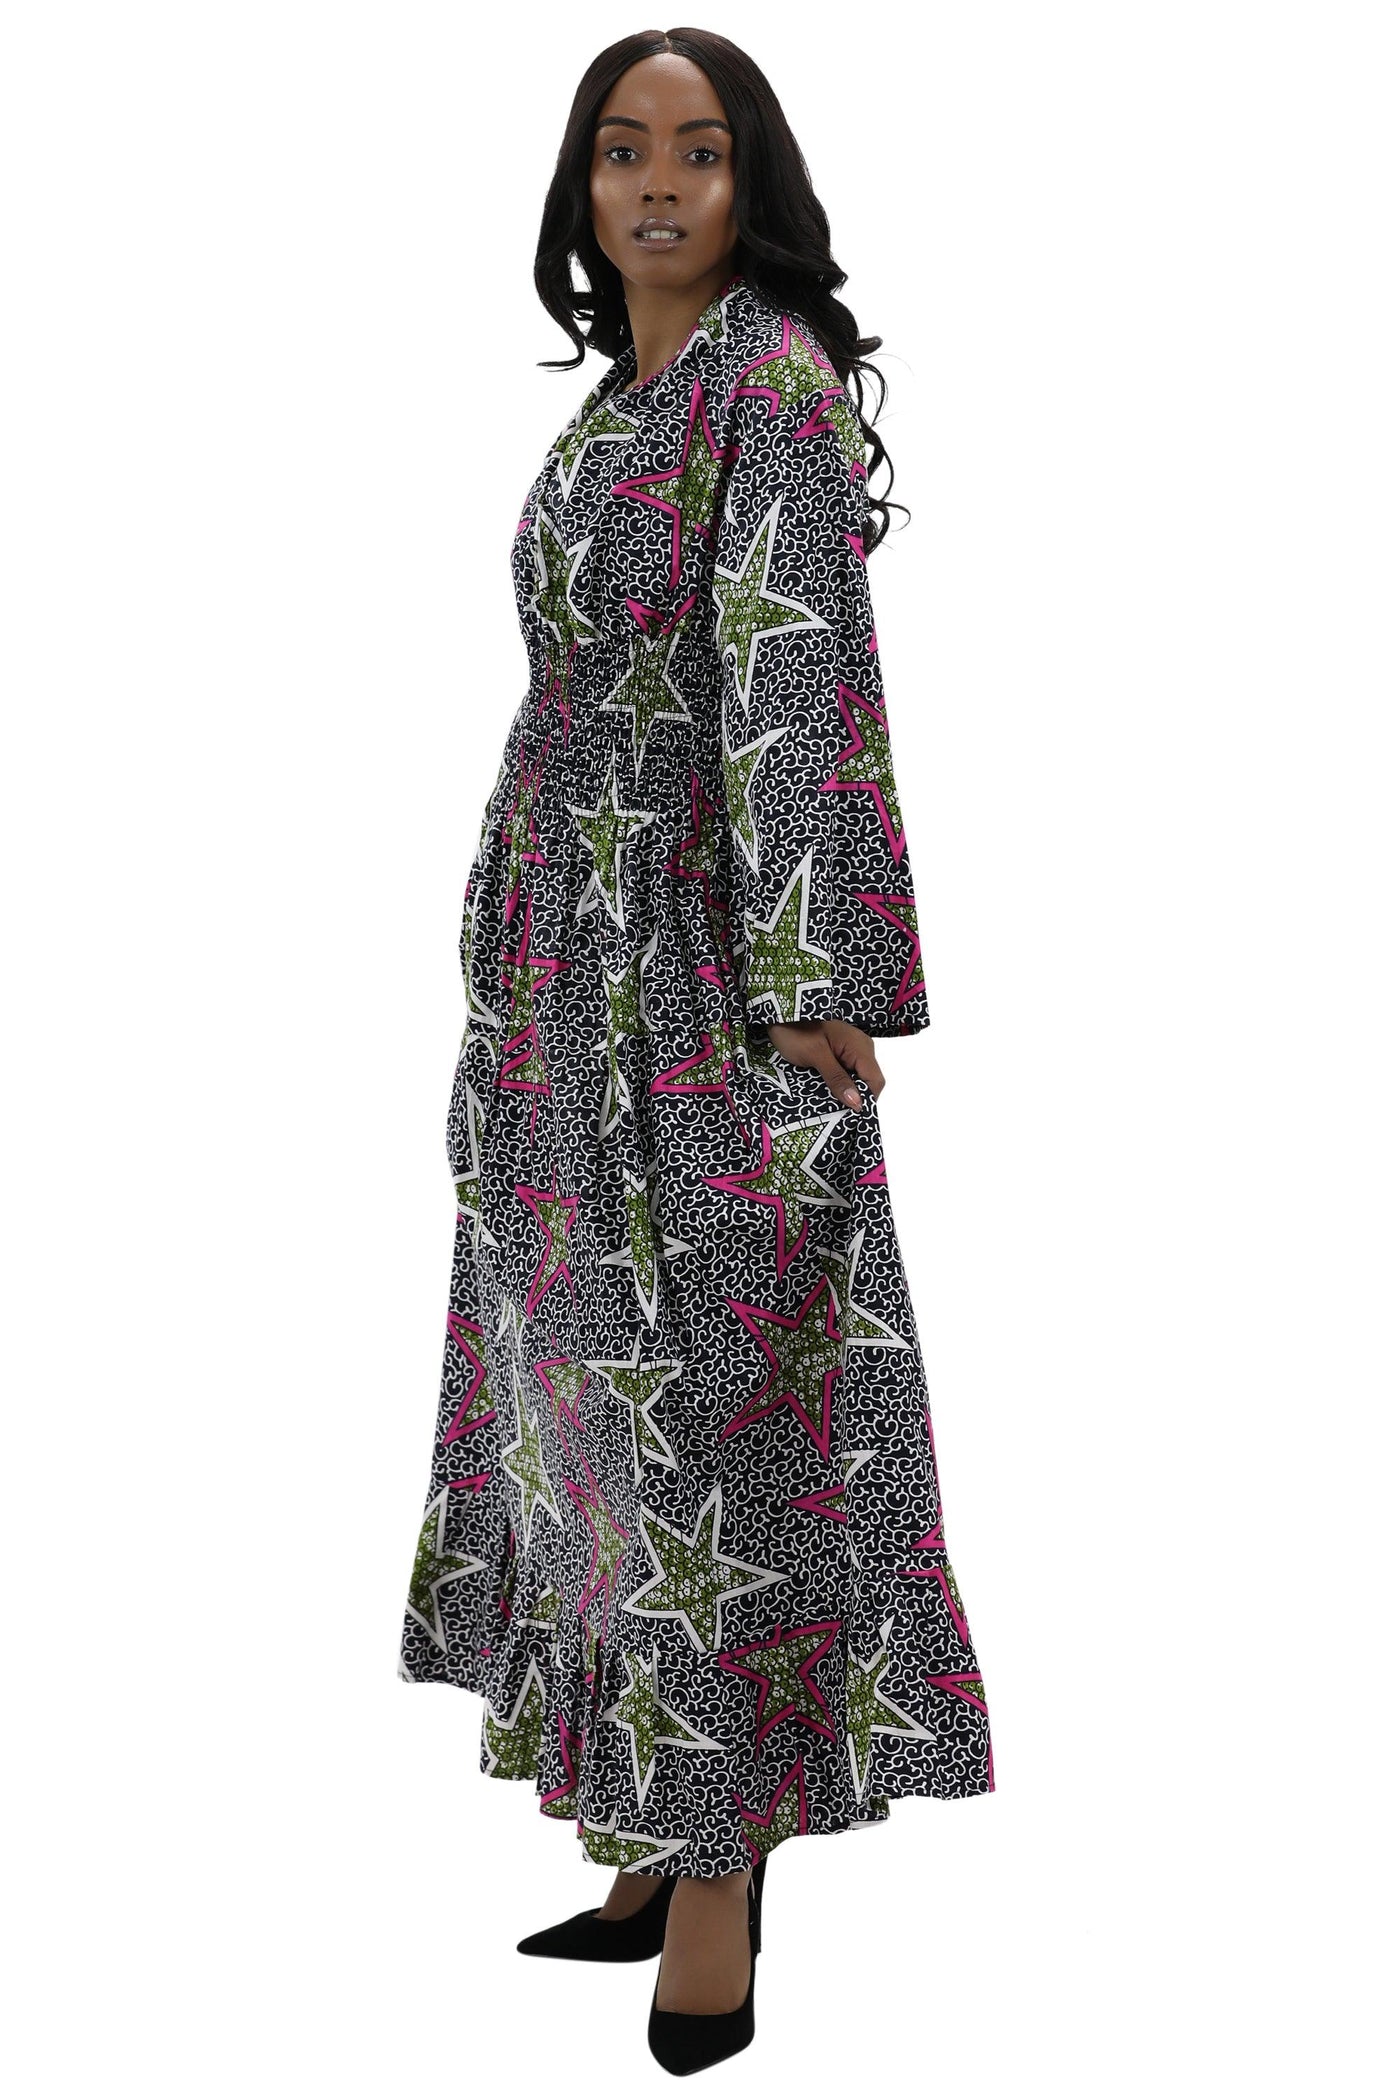 Bell Sleeves Long African Print Maxi Dress 2183  - Advance Apparels Inc